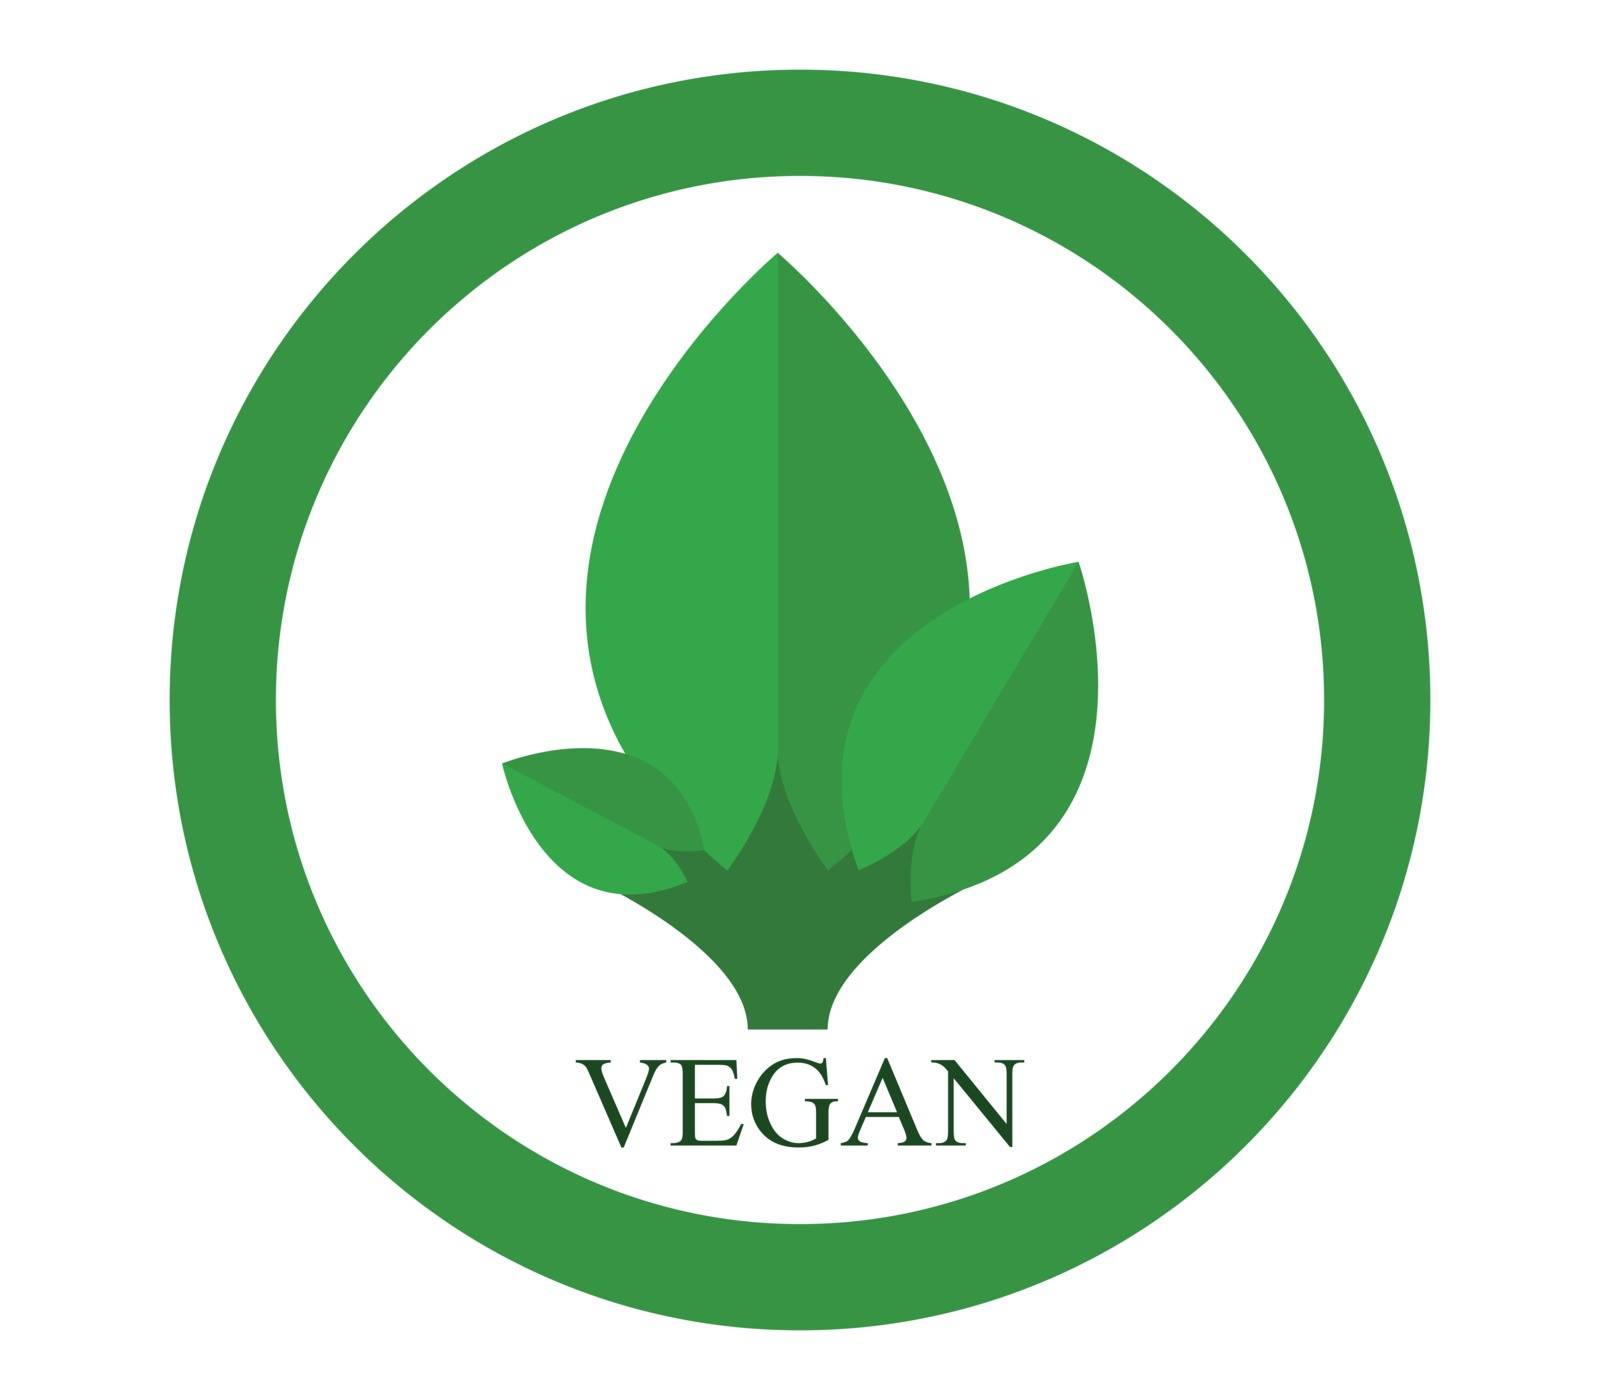 vegan icon by Mark1987